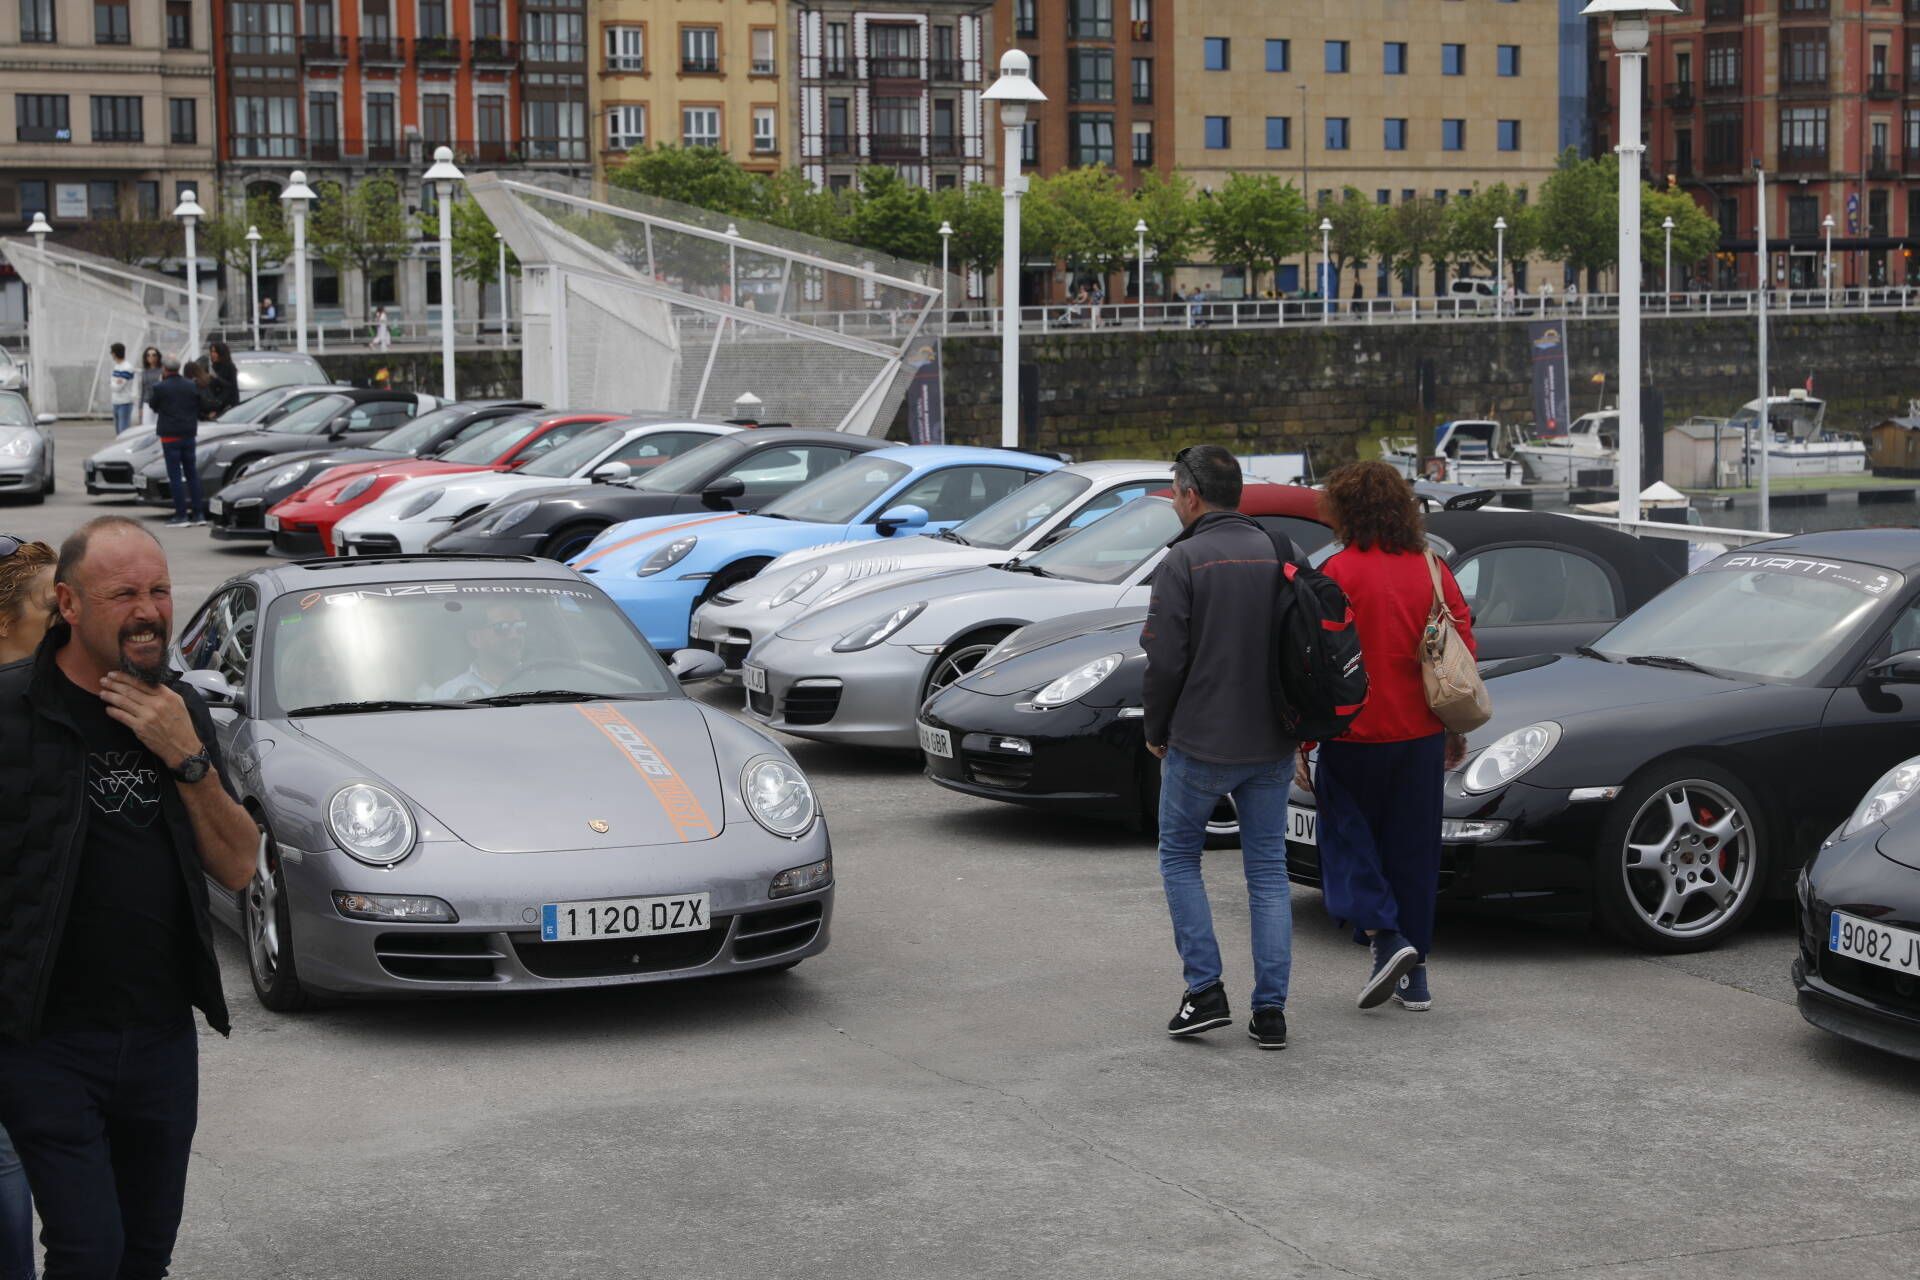 En imágenes: Concentración de Porsches en Gijón